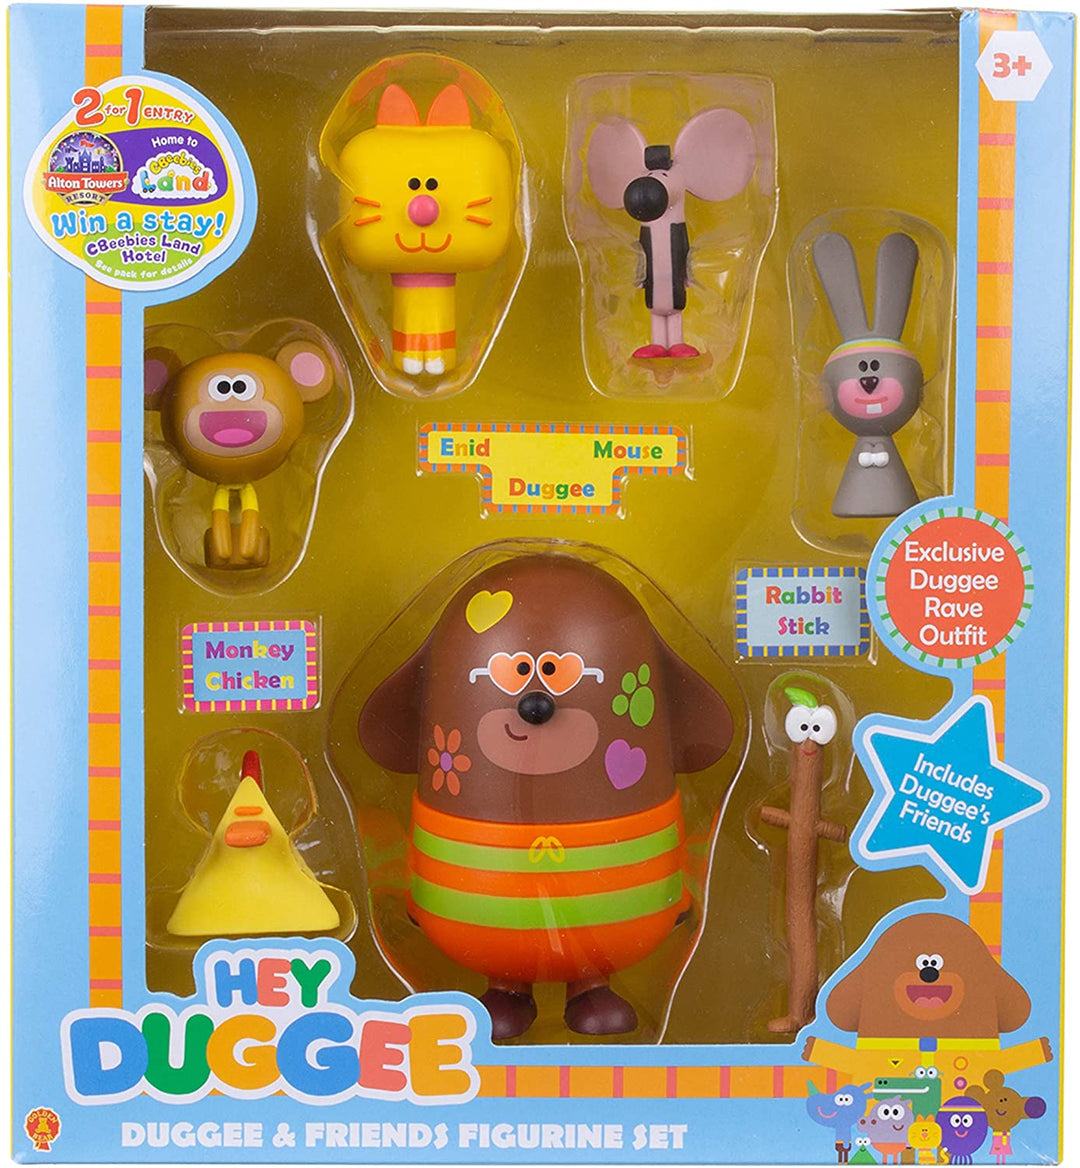 Hey Duggee 539 1988 Duggee and Friends Figurine Set, red, 6.5 x 23.5 x 21.5 cm